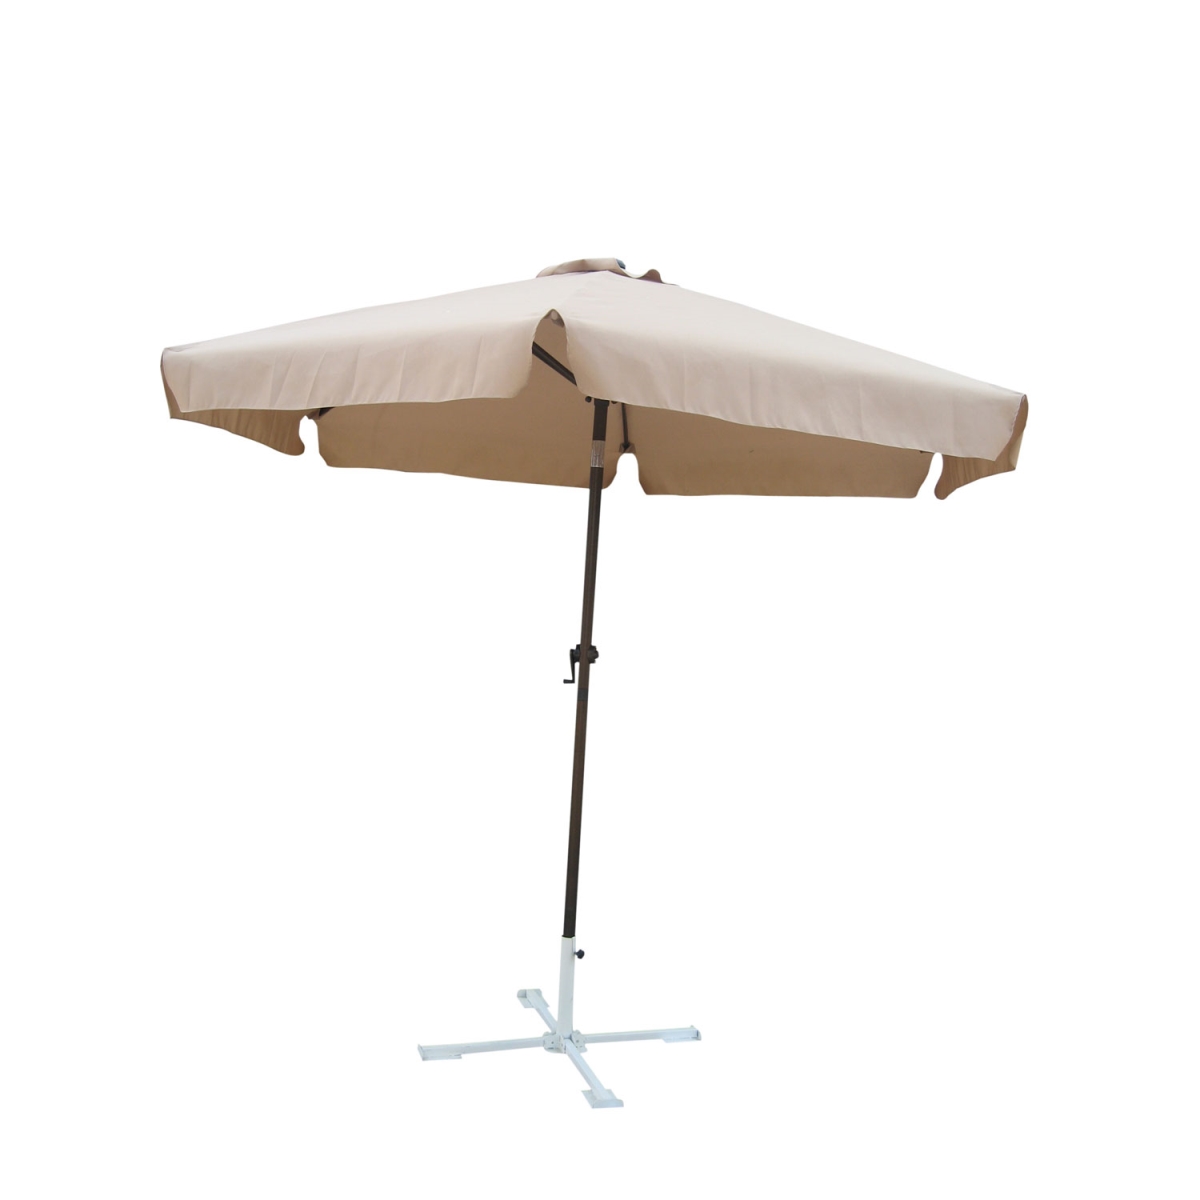 60403-kh 8 Ft. Outdoor Aluminum Umbrella, Khaki